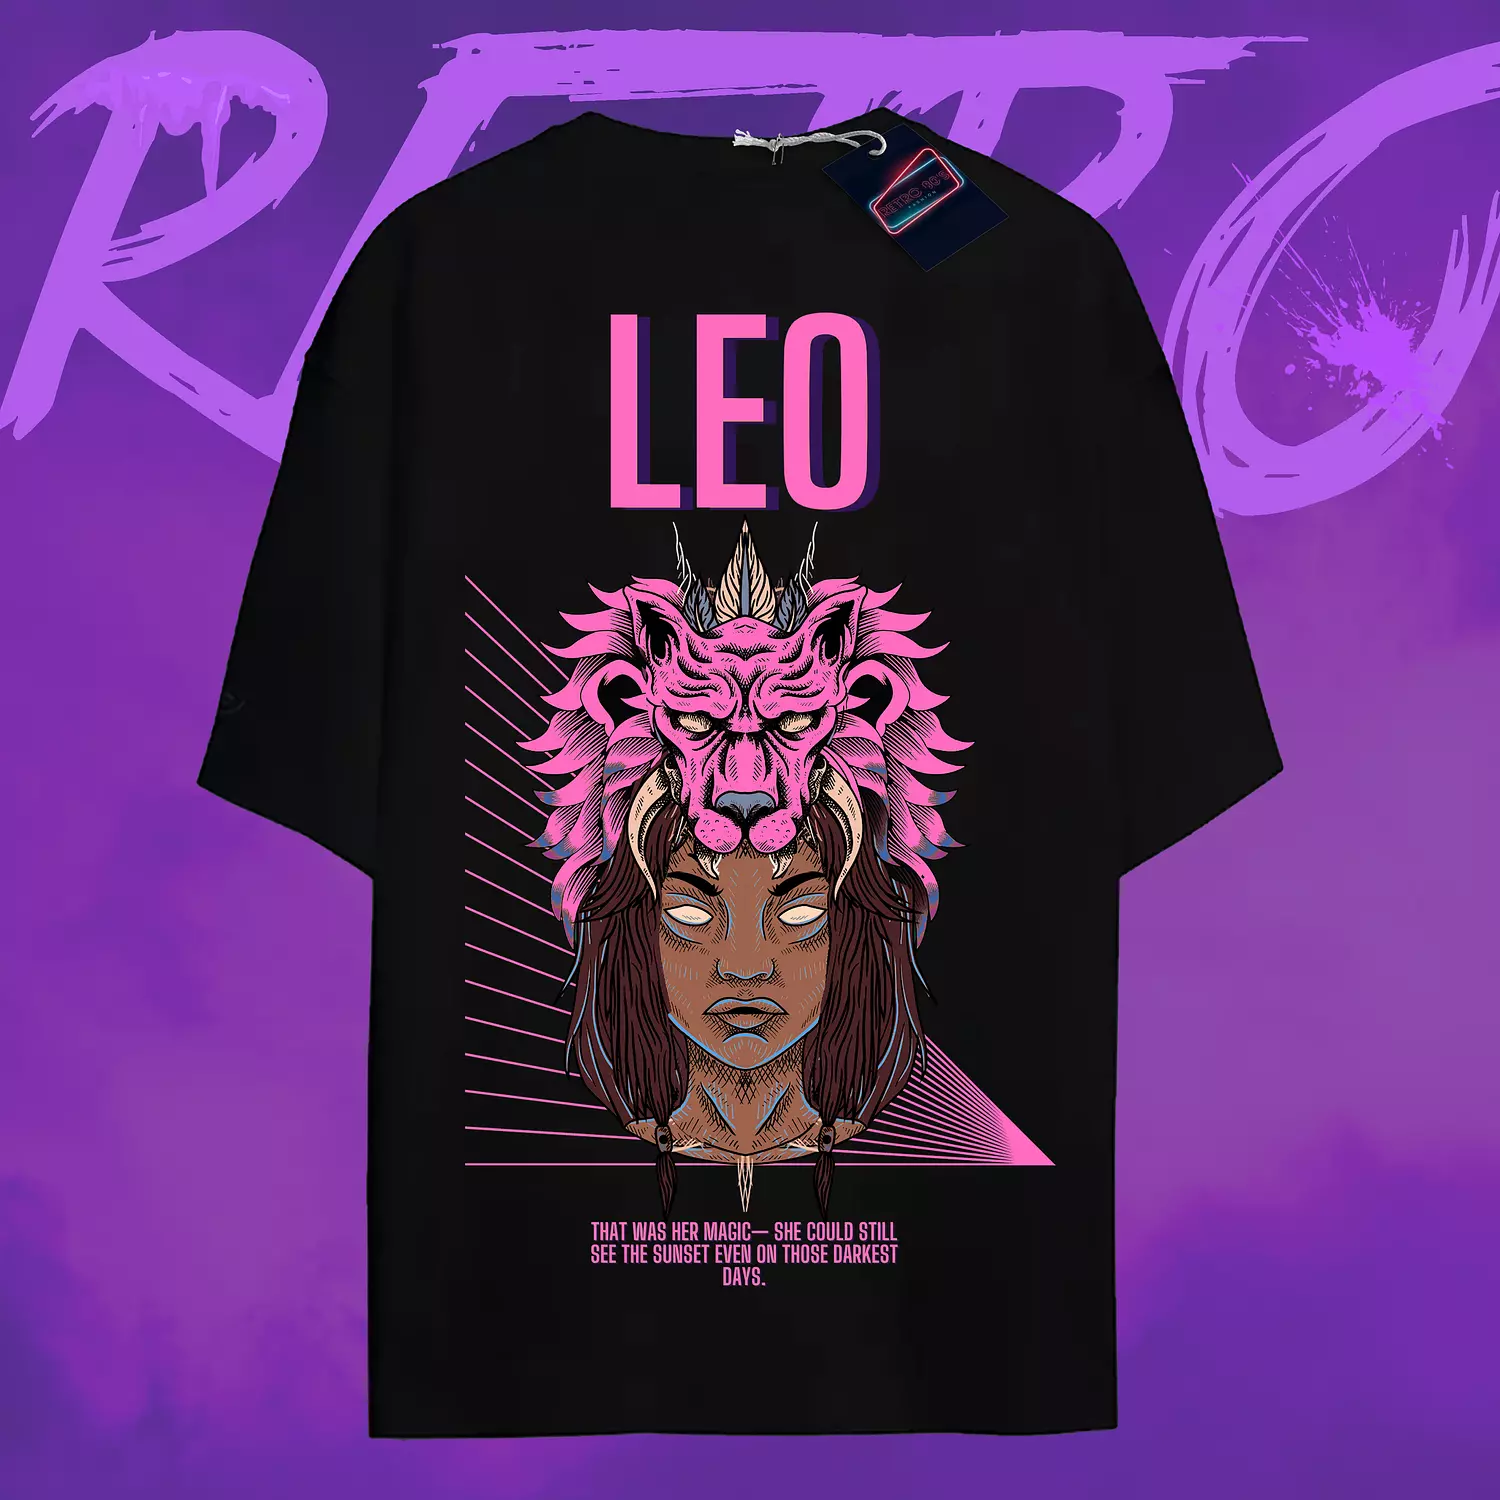 Leo T-shirt hover image